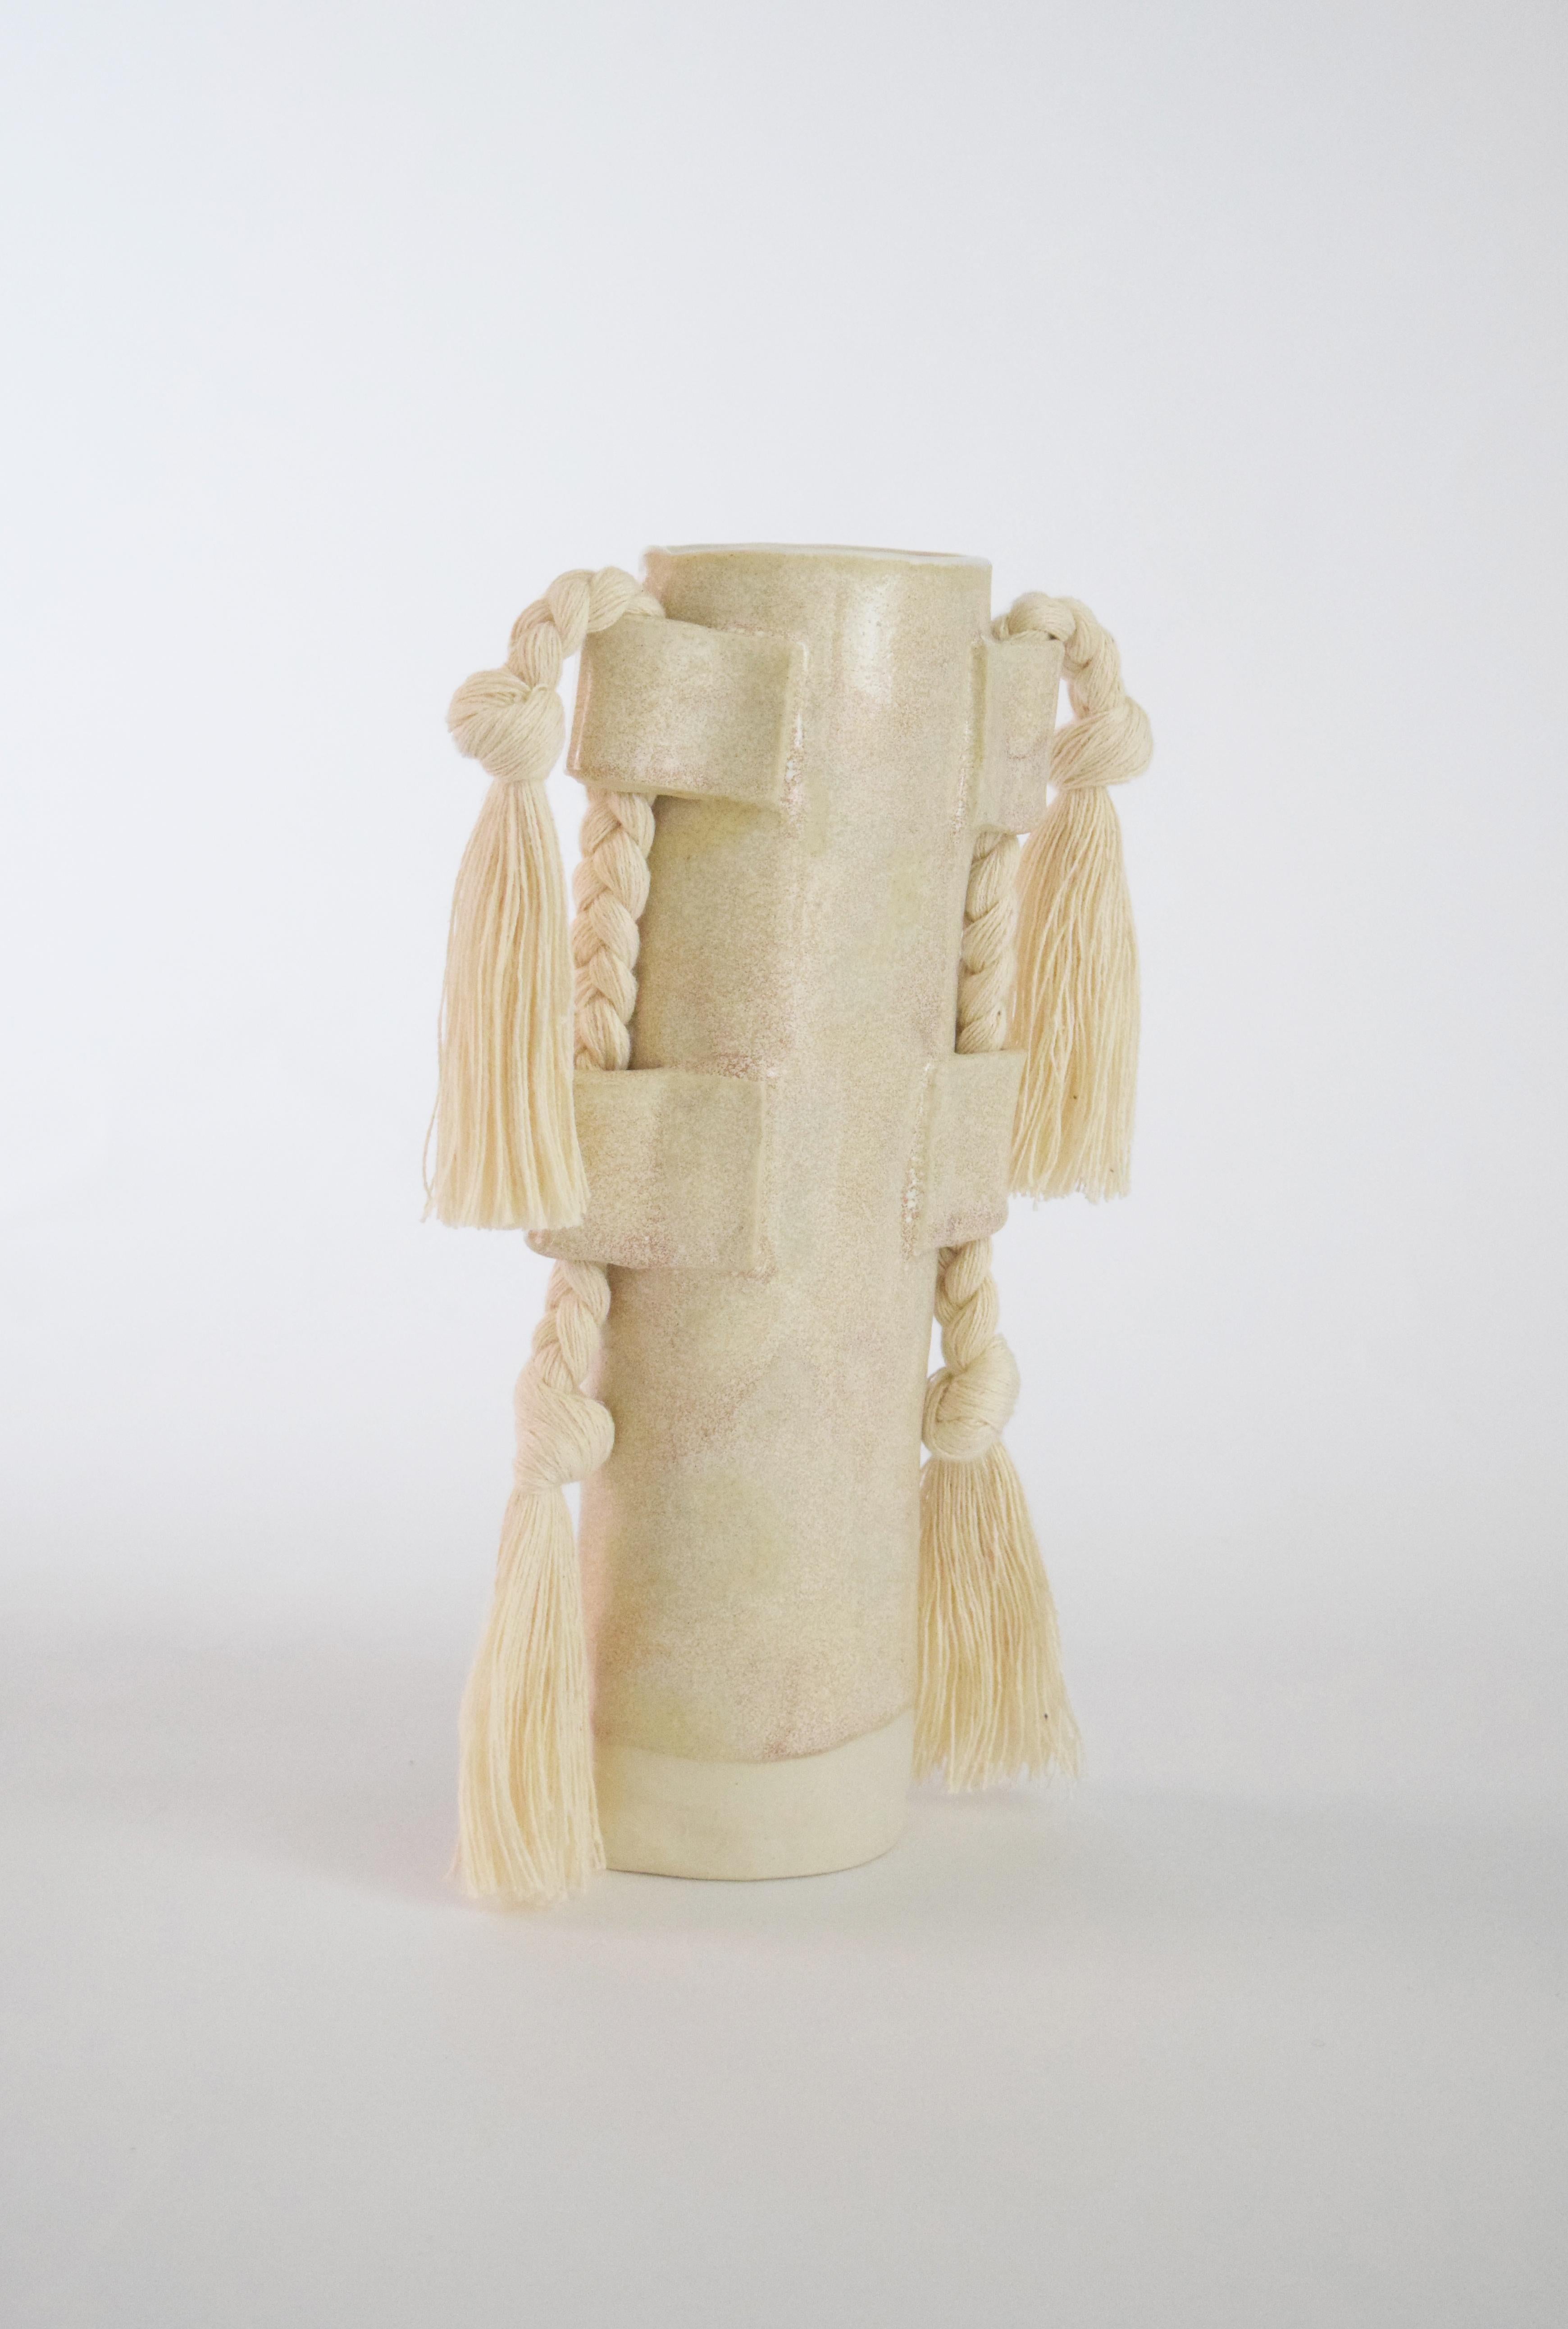 Hand-Crafted Handmade Vase #504 in Cream with Cream Cotton Fringe